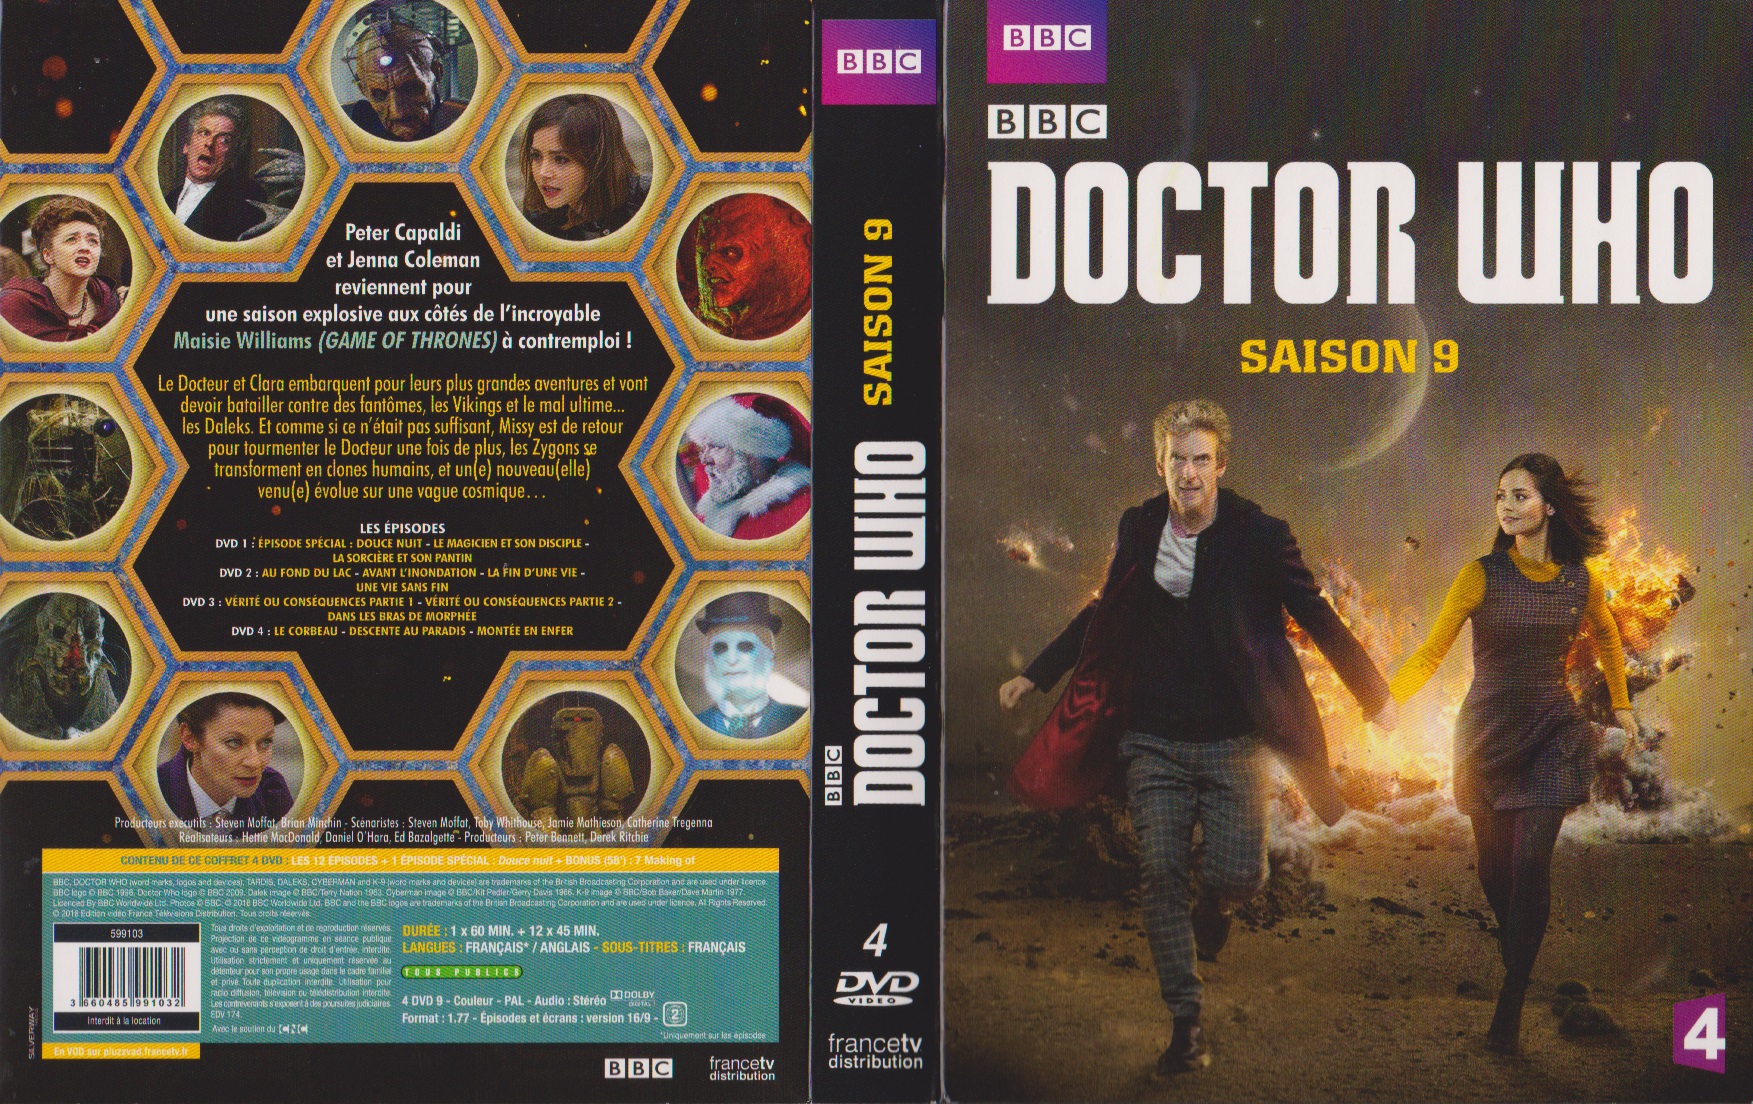 Jaquette DVD Doctor Who Saison 9